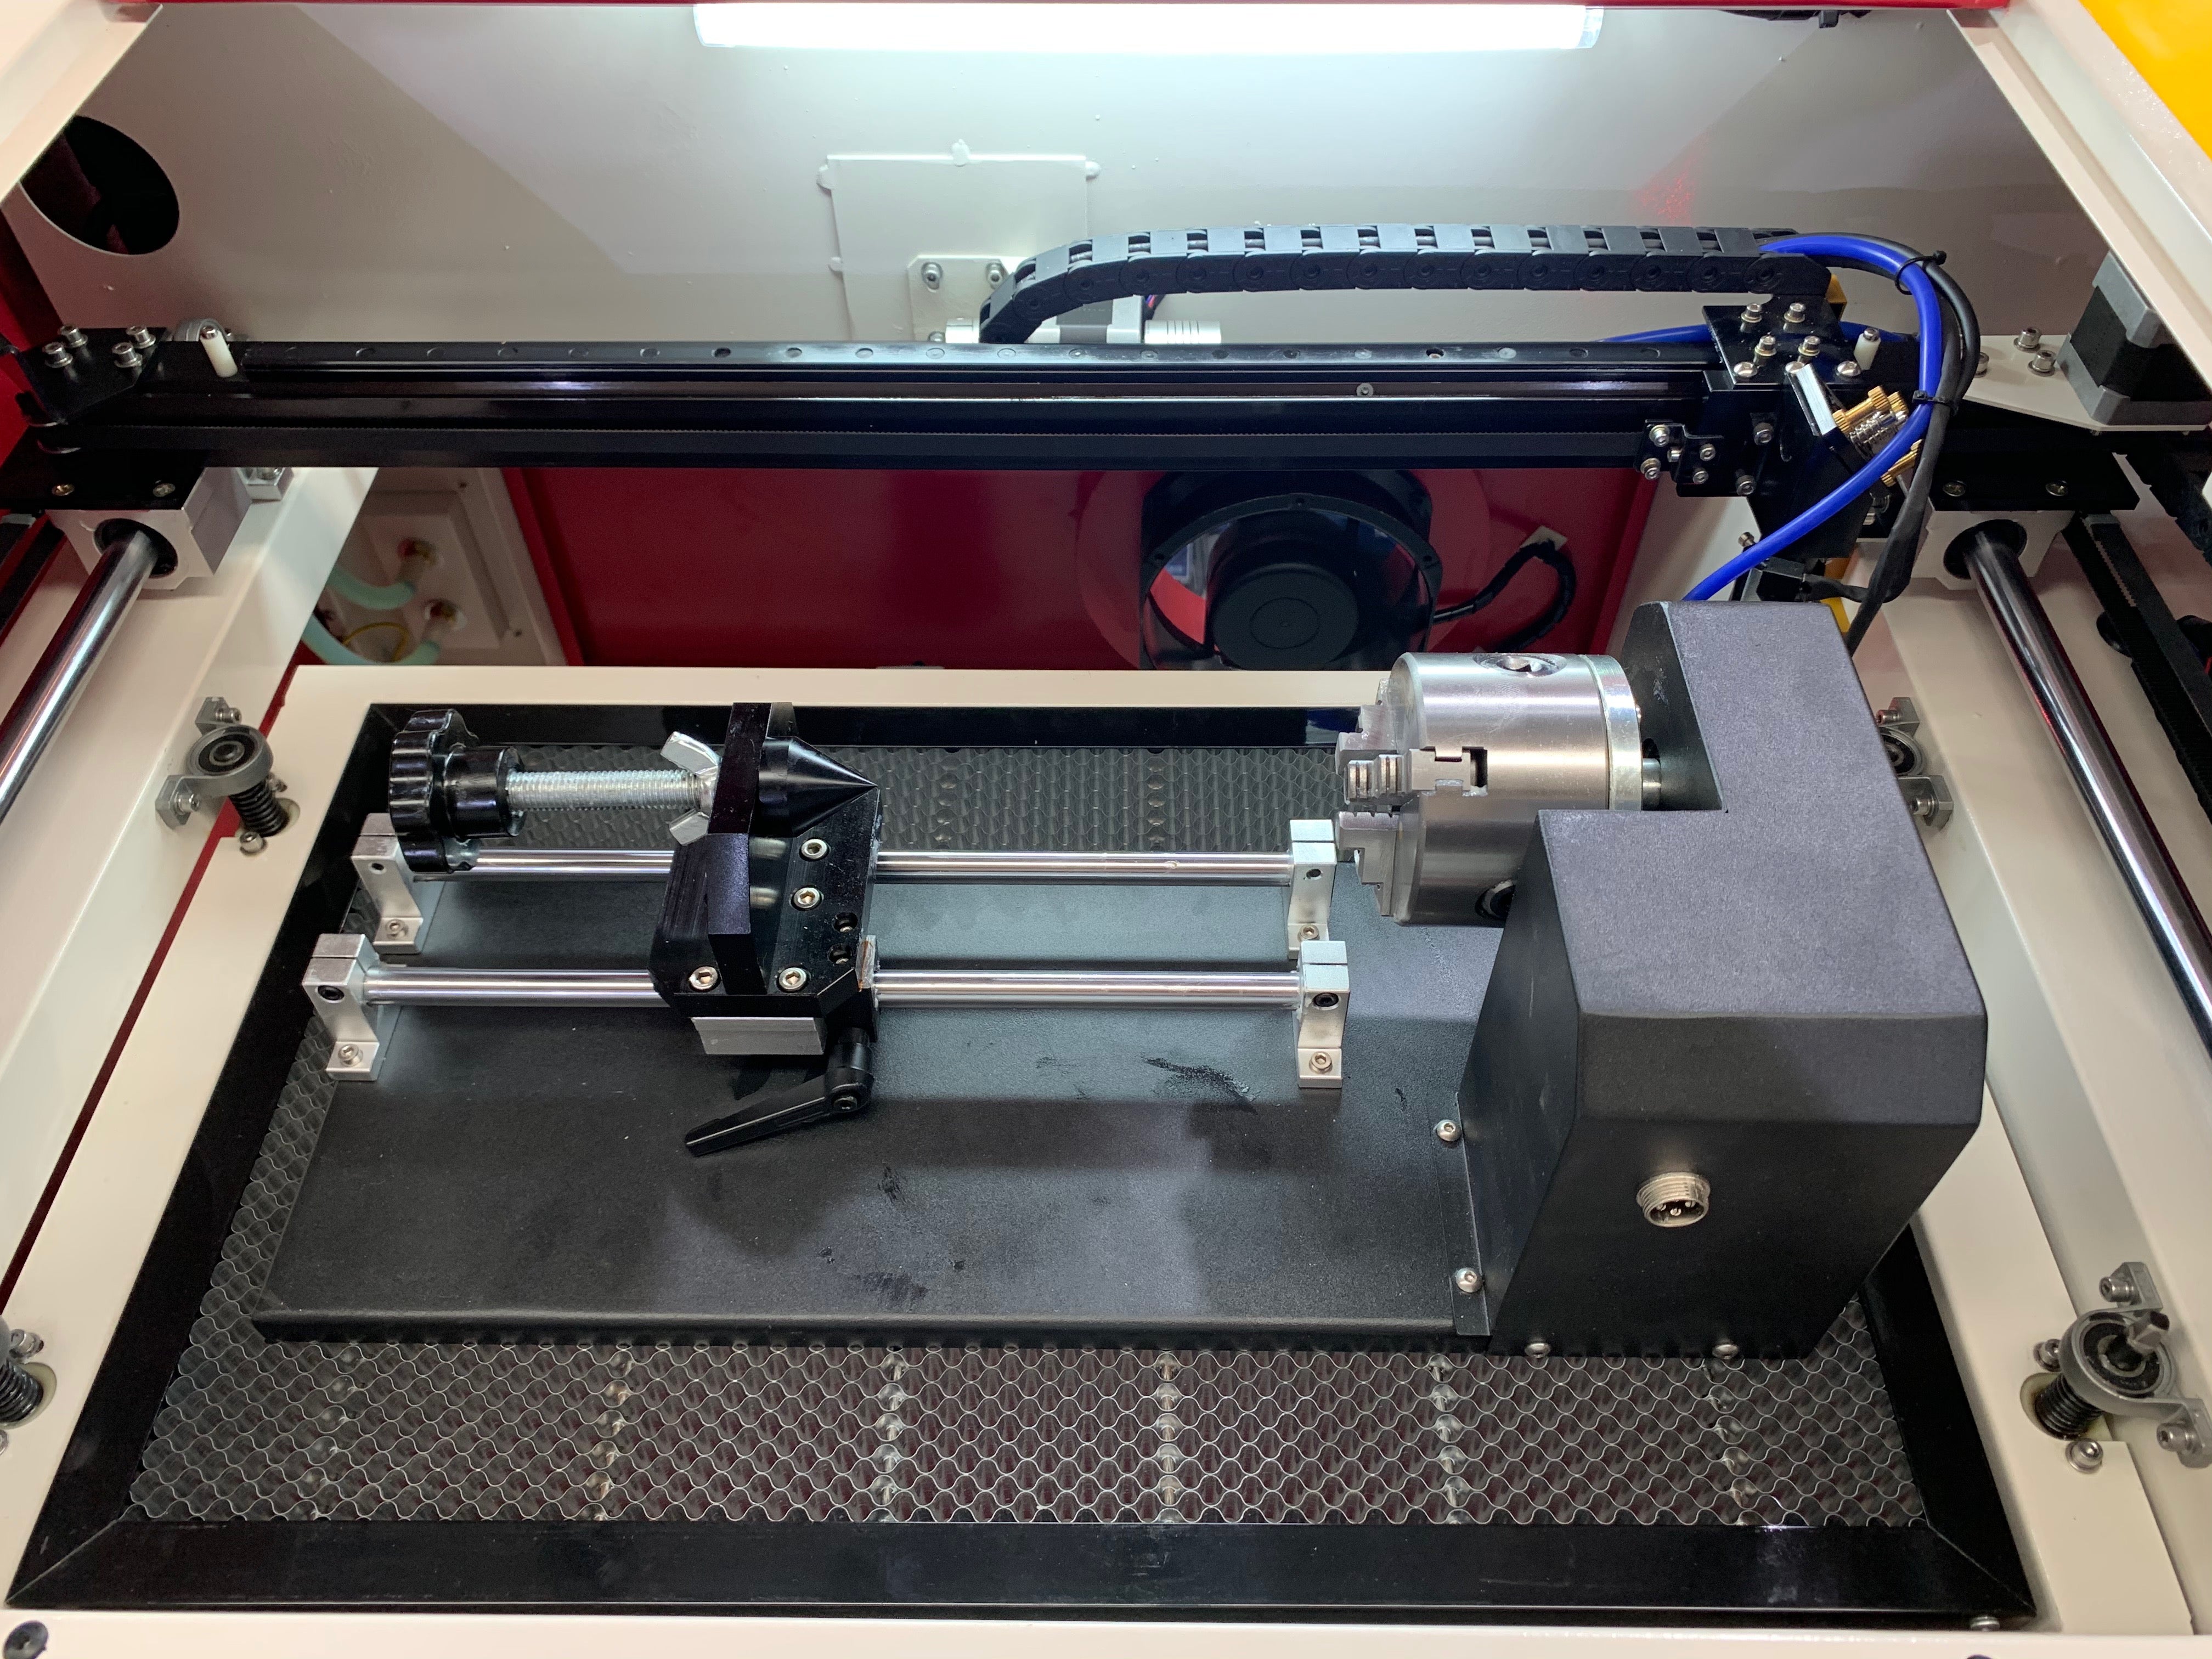 500mm x 300mm 50W CNC CO2 Laser Machine RSX50-3050 by Redsail